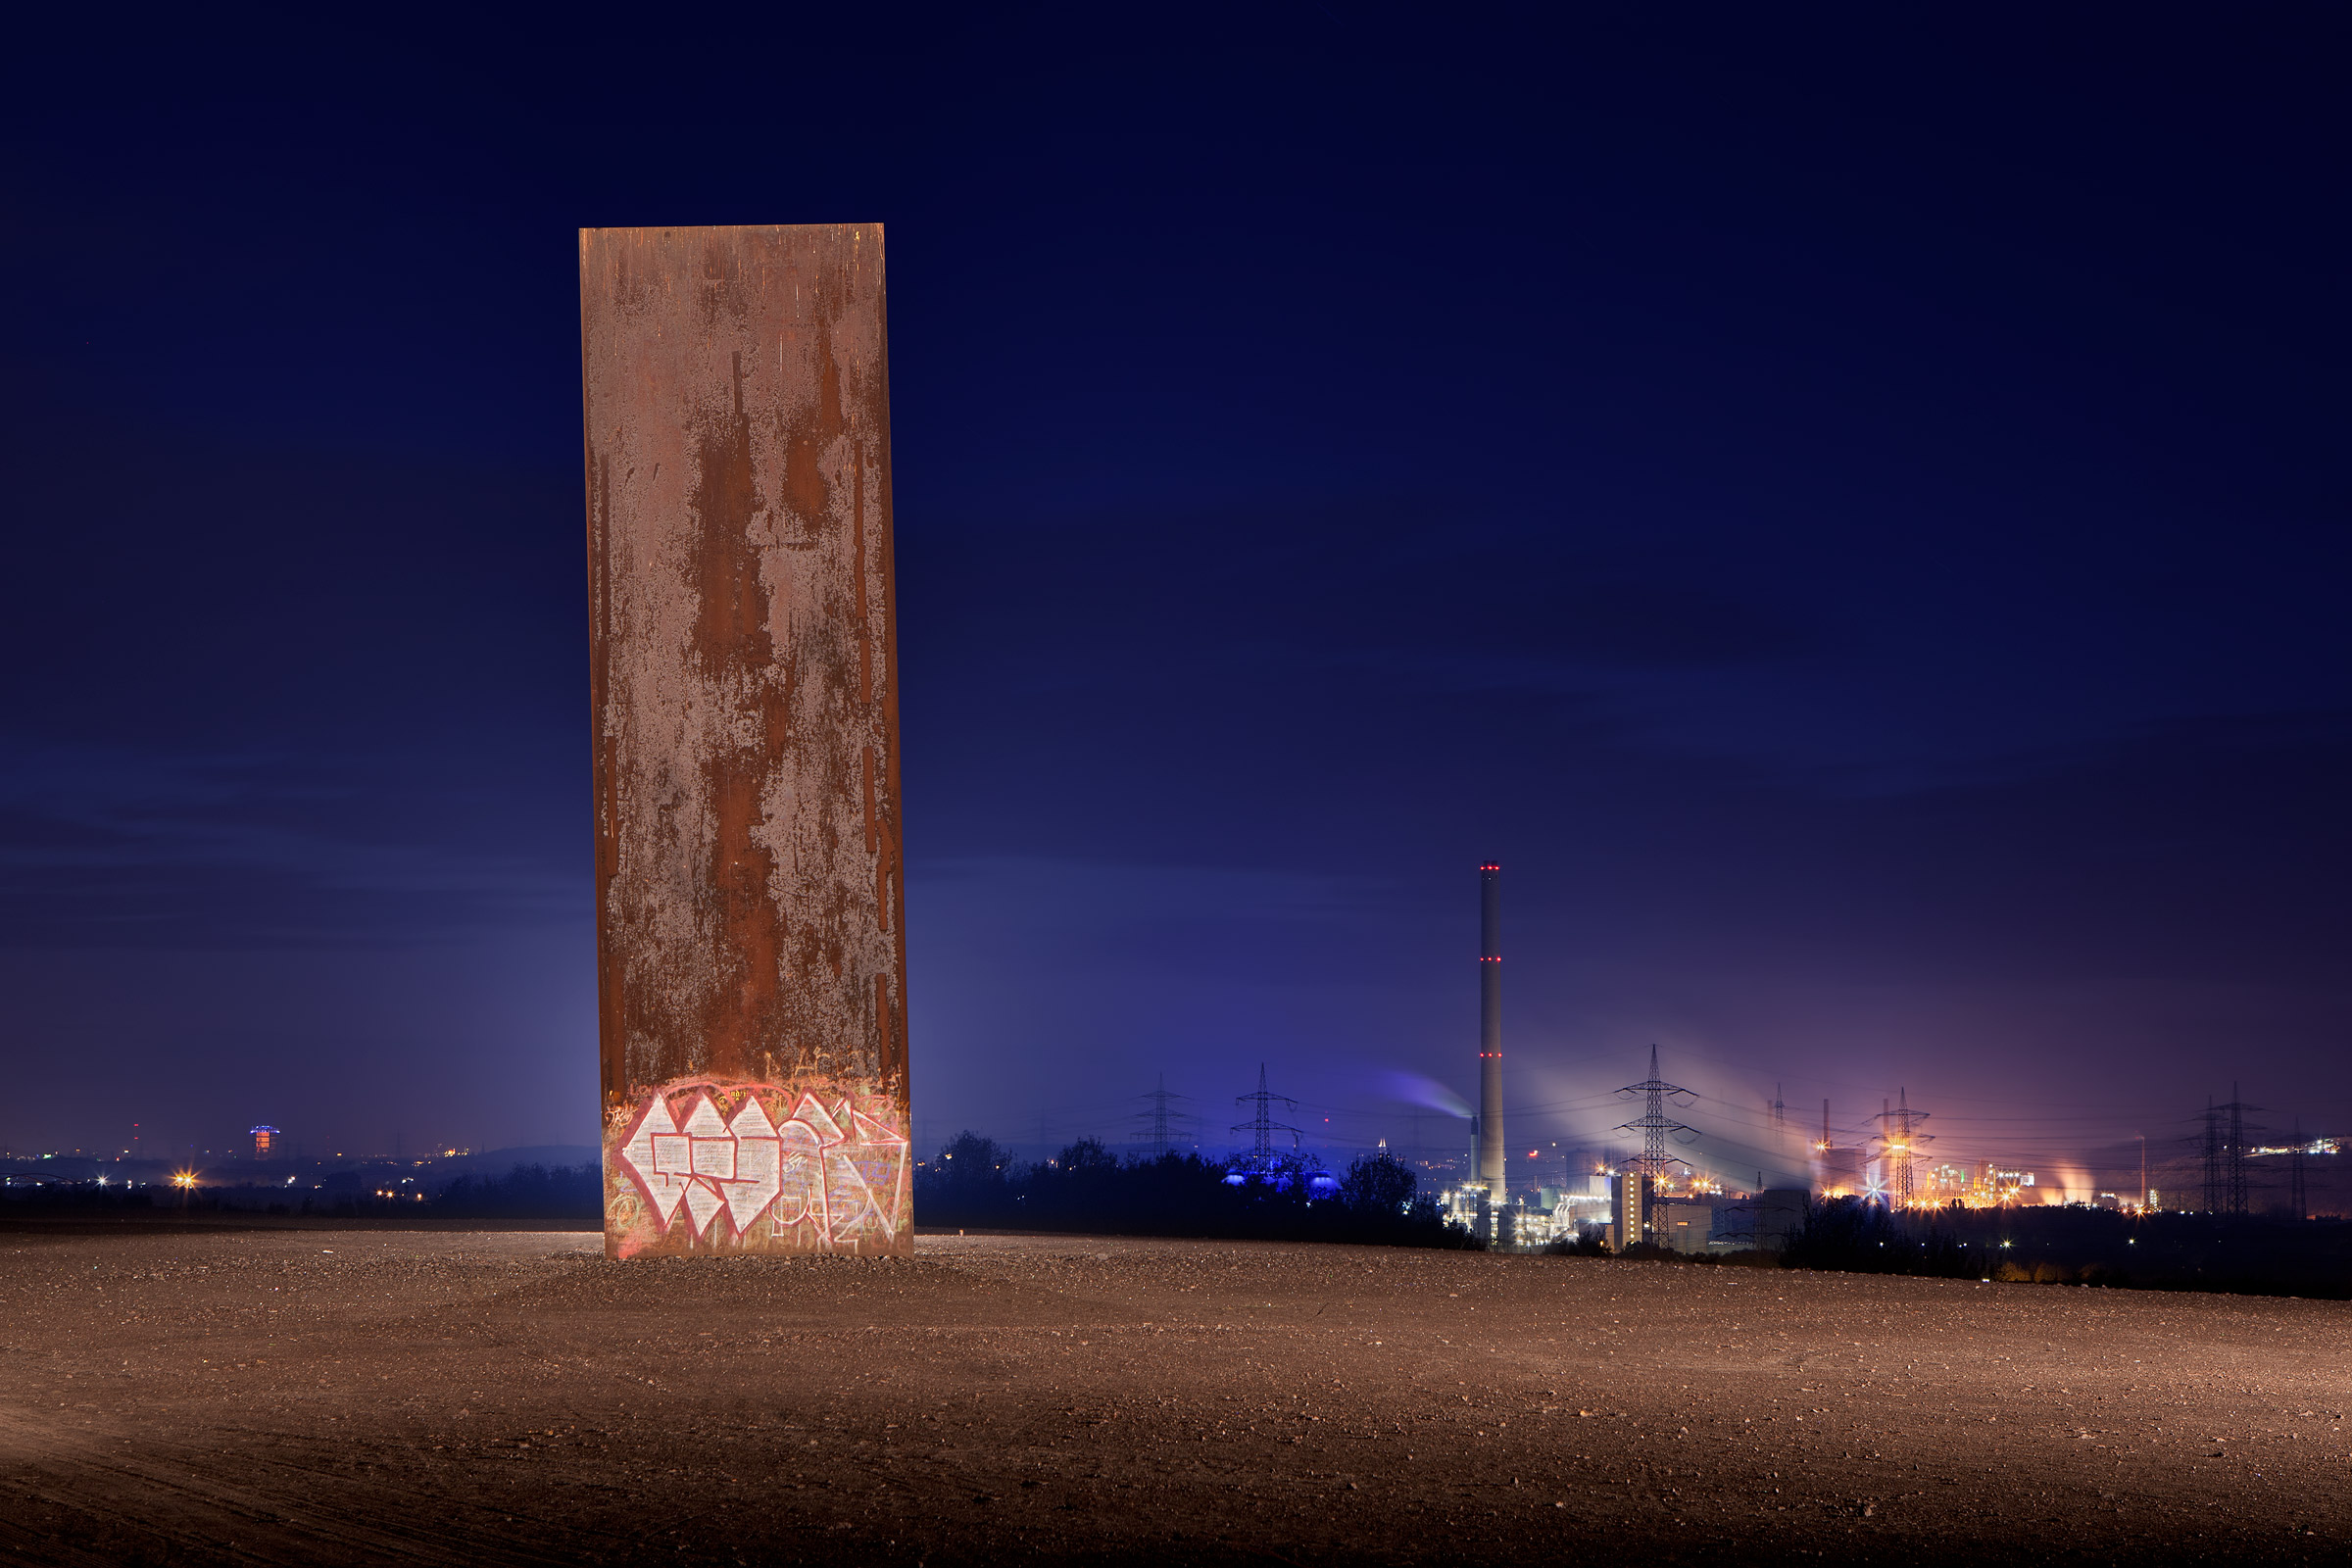 Bramme für das Ruhrgebiet V (Richard Serra)